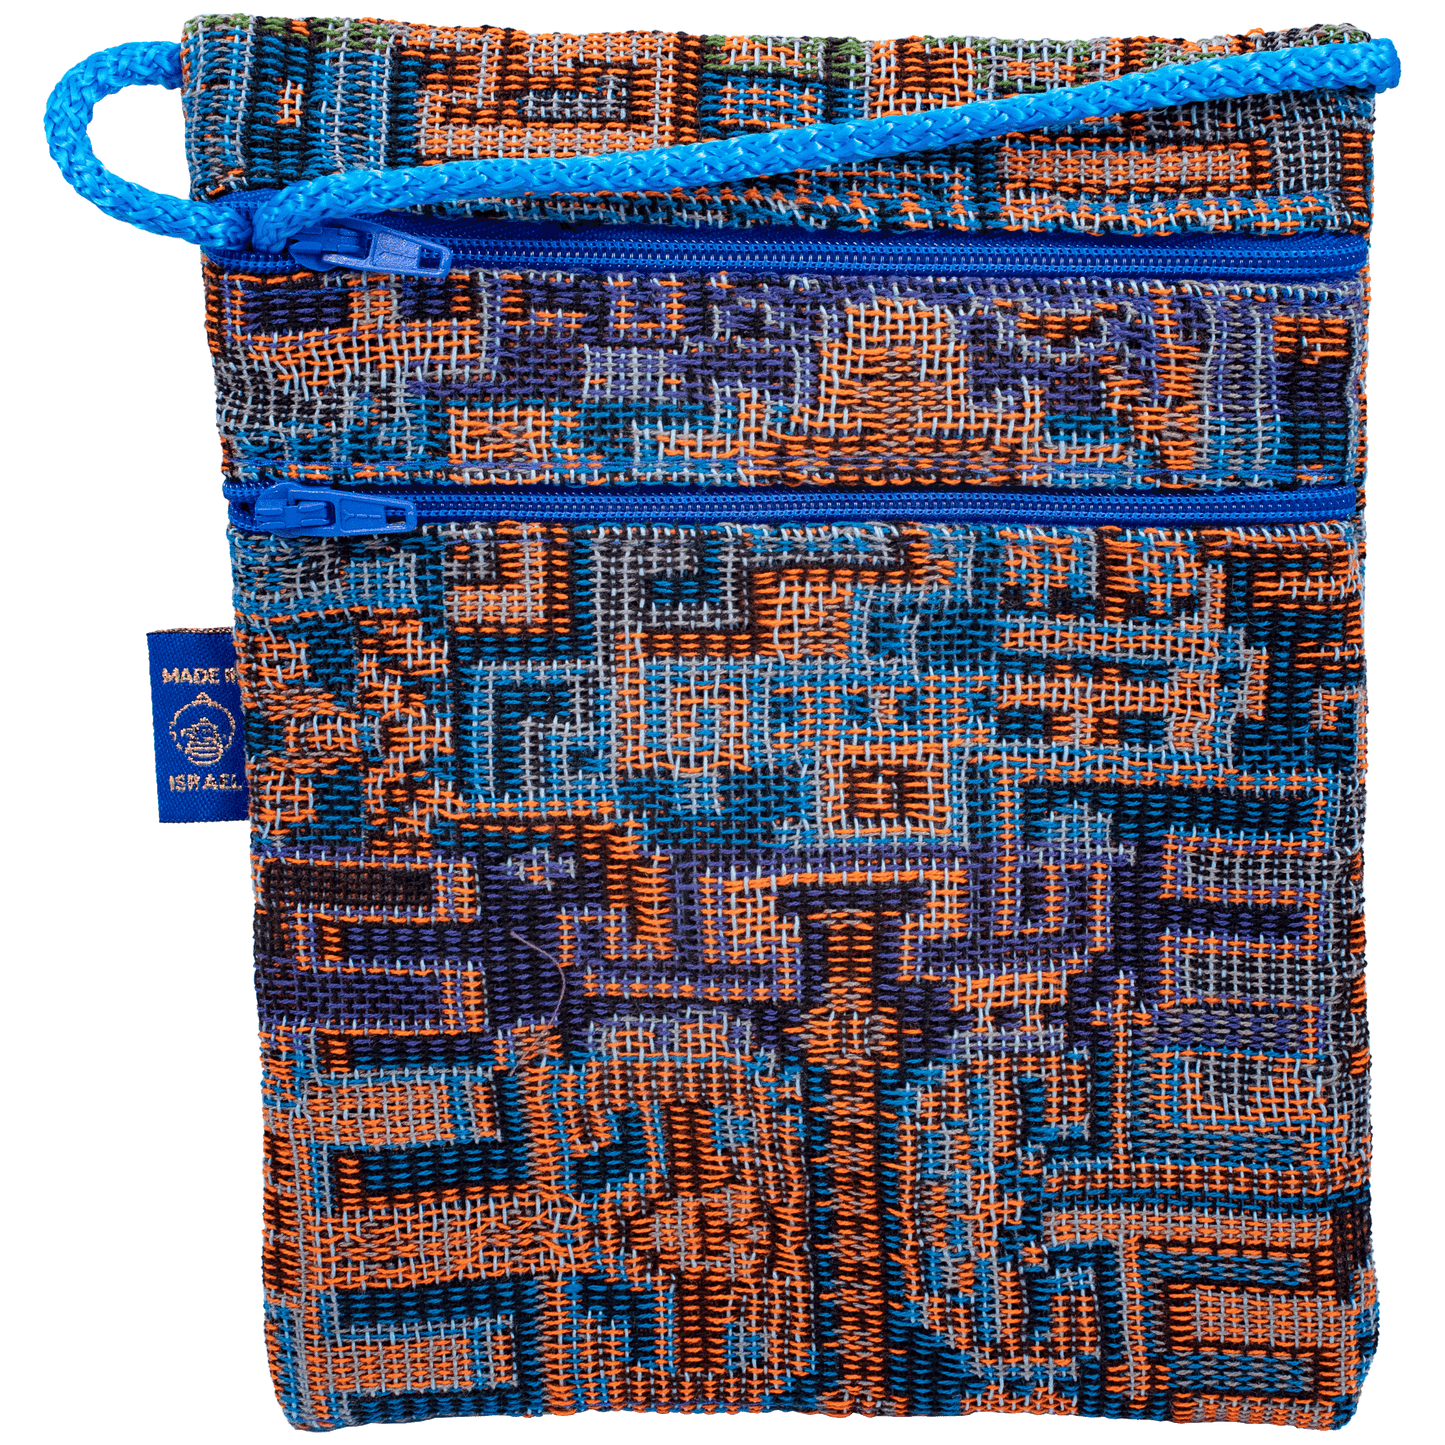 Crossbody purse with Blue purple and orange Tribal pattern